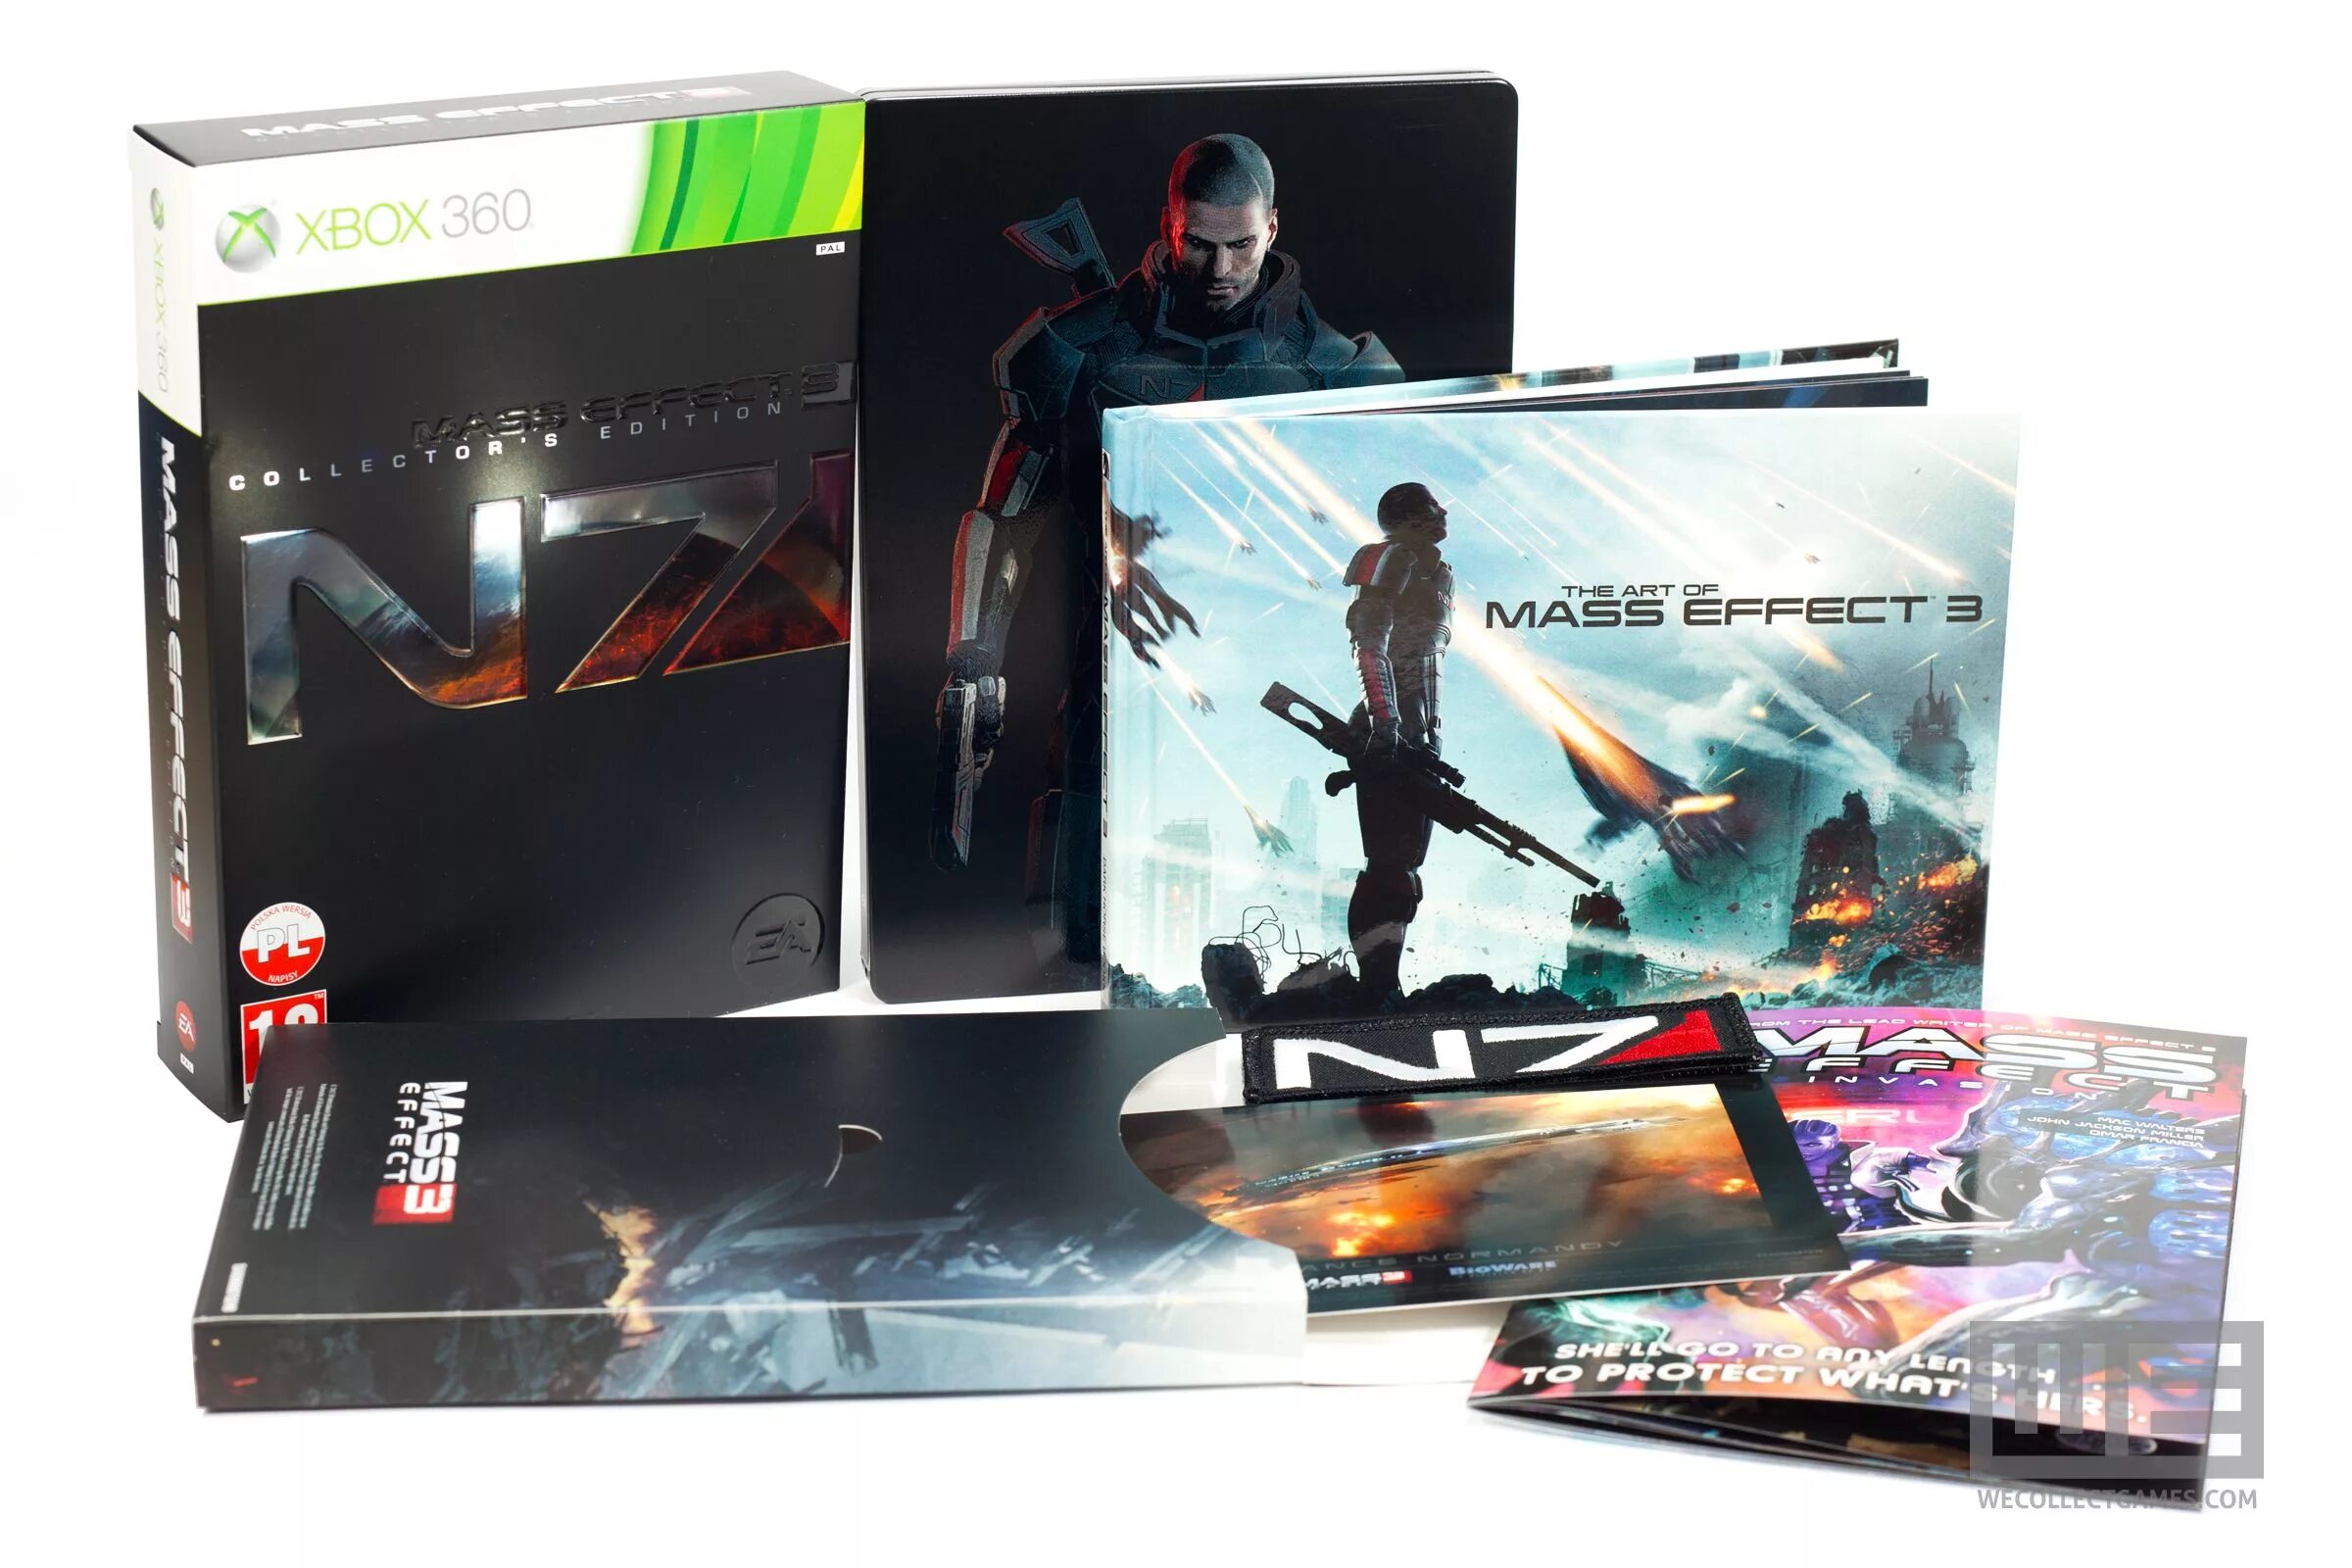 Xbox 360 collection. Xbox 360 Mass Effect Edition. Mass Effect 3 n7 коллекционное издание (Xbox 360). Коллекционки Xbox 360. Mass Effect 1 коллекционное издание.